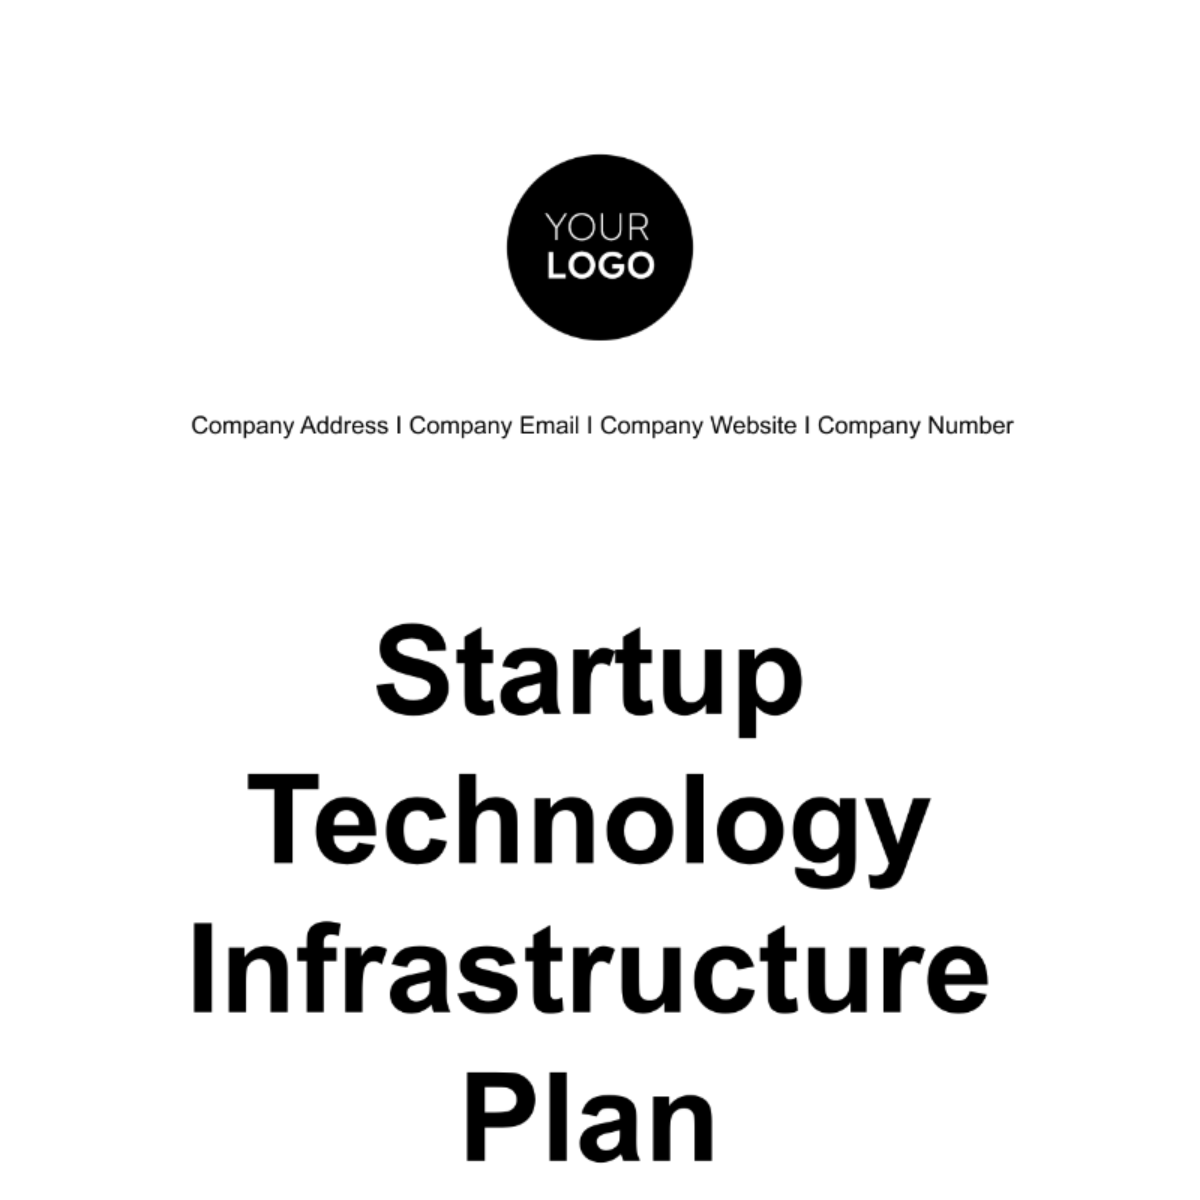 Startup Technology Infrastructure Plan Template